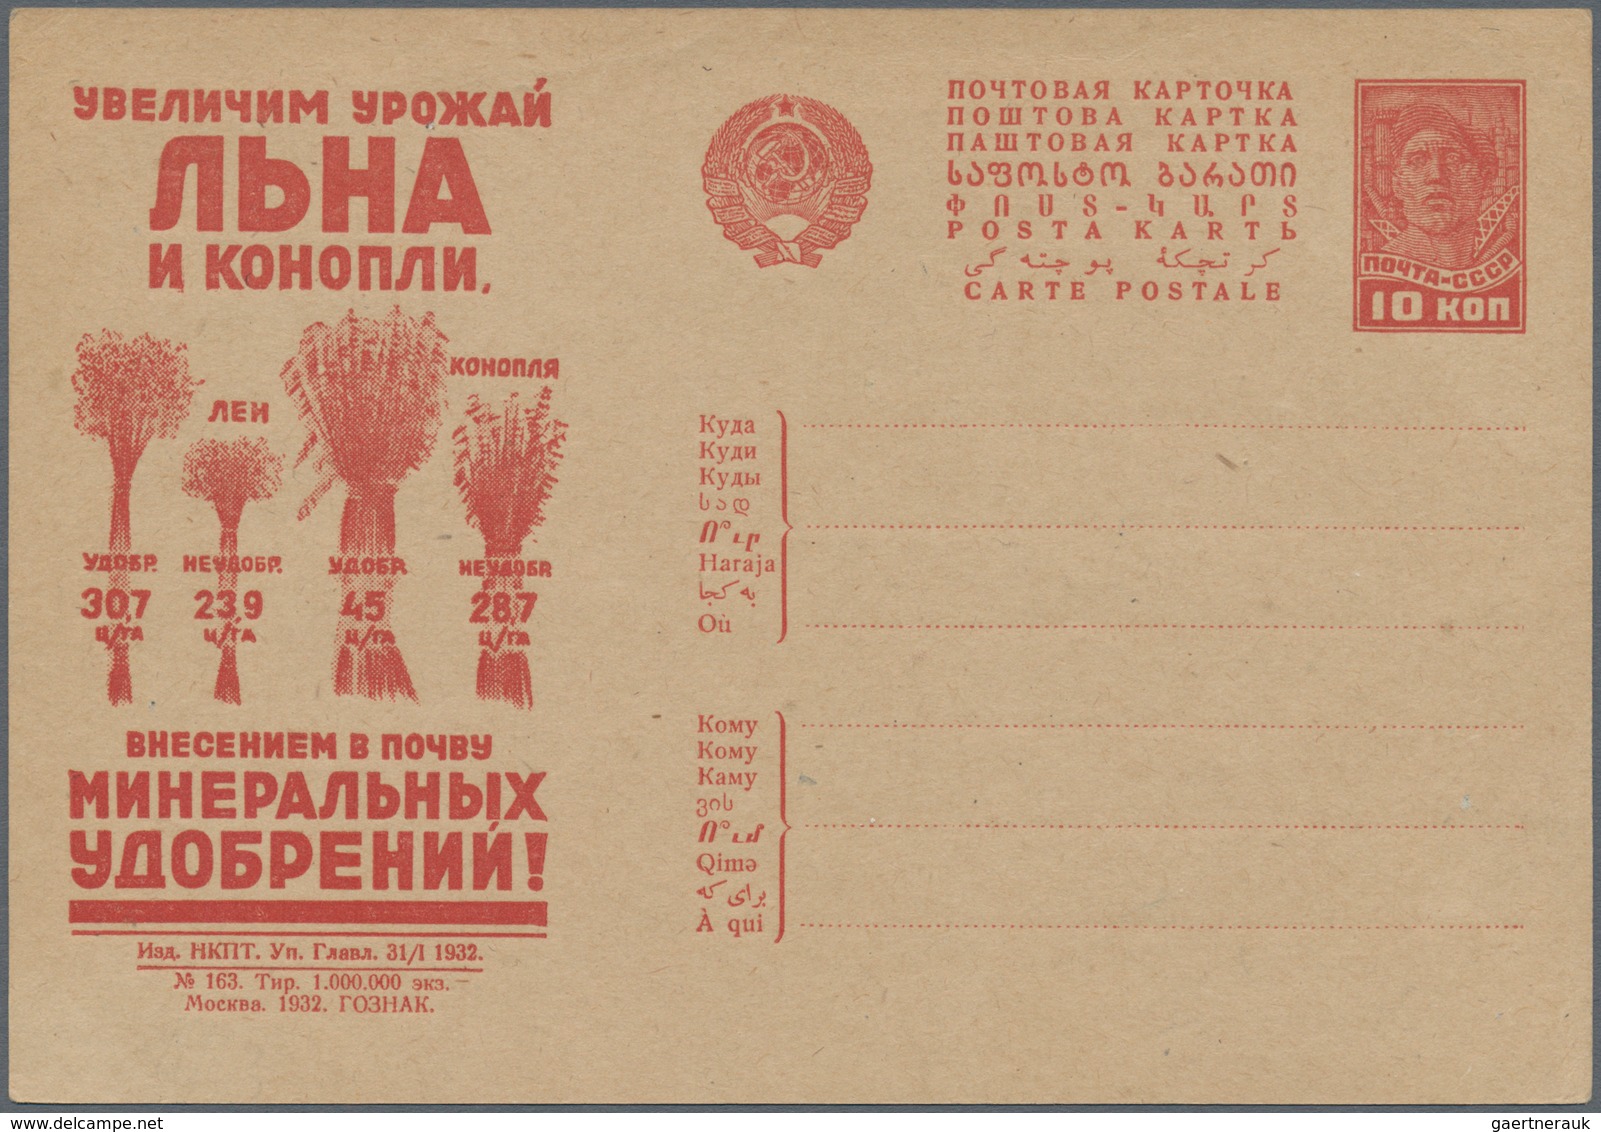 Sowjetunion - Ganzsachen: 1929/32, 7 unused picture postcards with motives grain, grain mill, harves